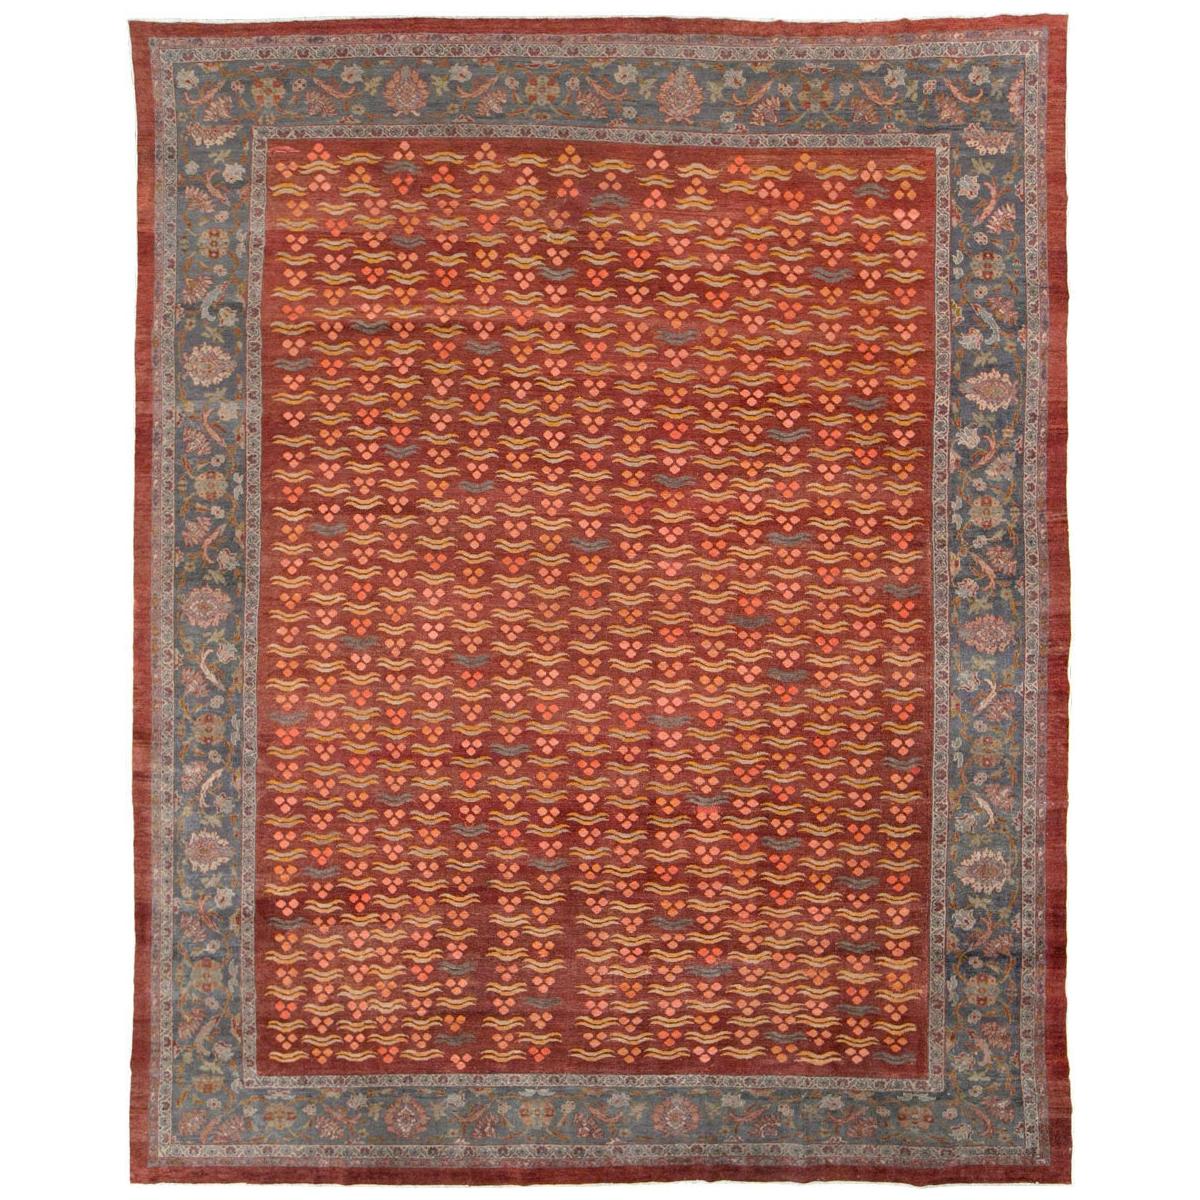 Early 20th Century Handmade Persian Chintamani Mahal Large Room Size Carpet